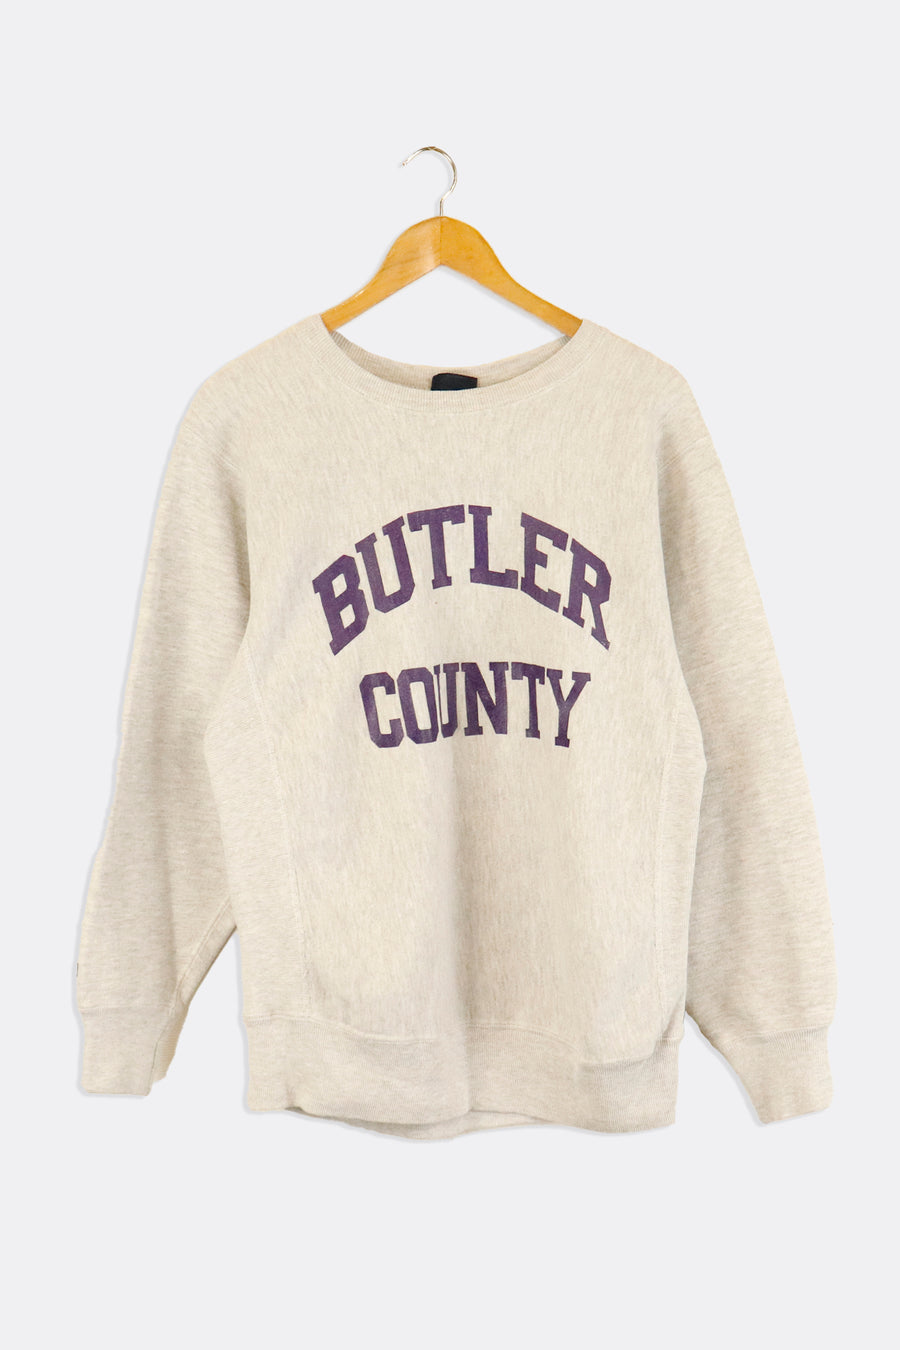 Vintage Butler County Vinyl Block Lettering Purple Font Sweatshirt Sz L